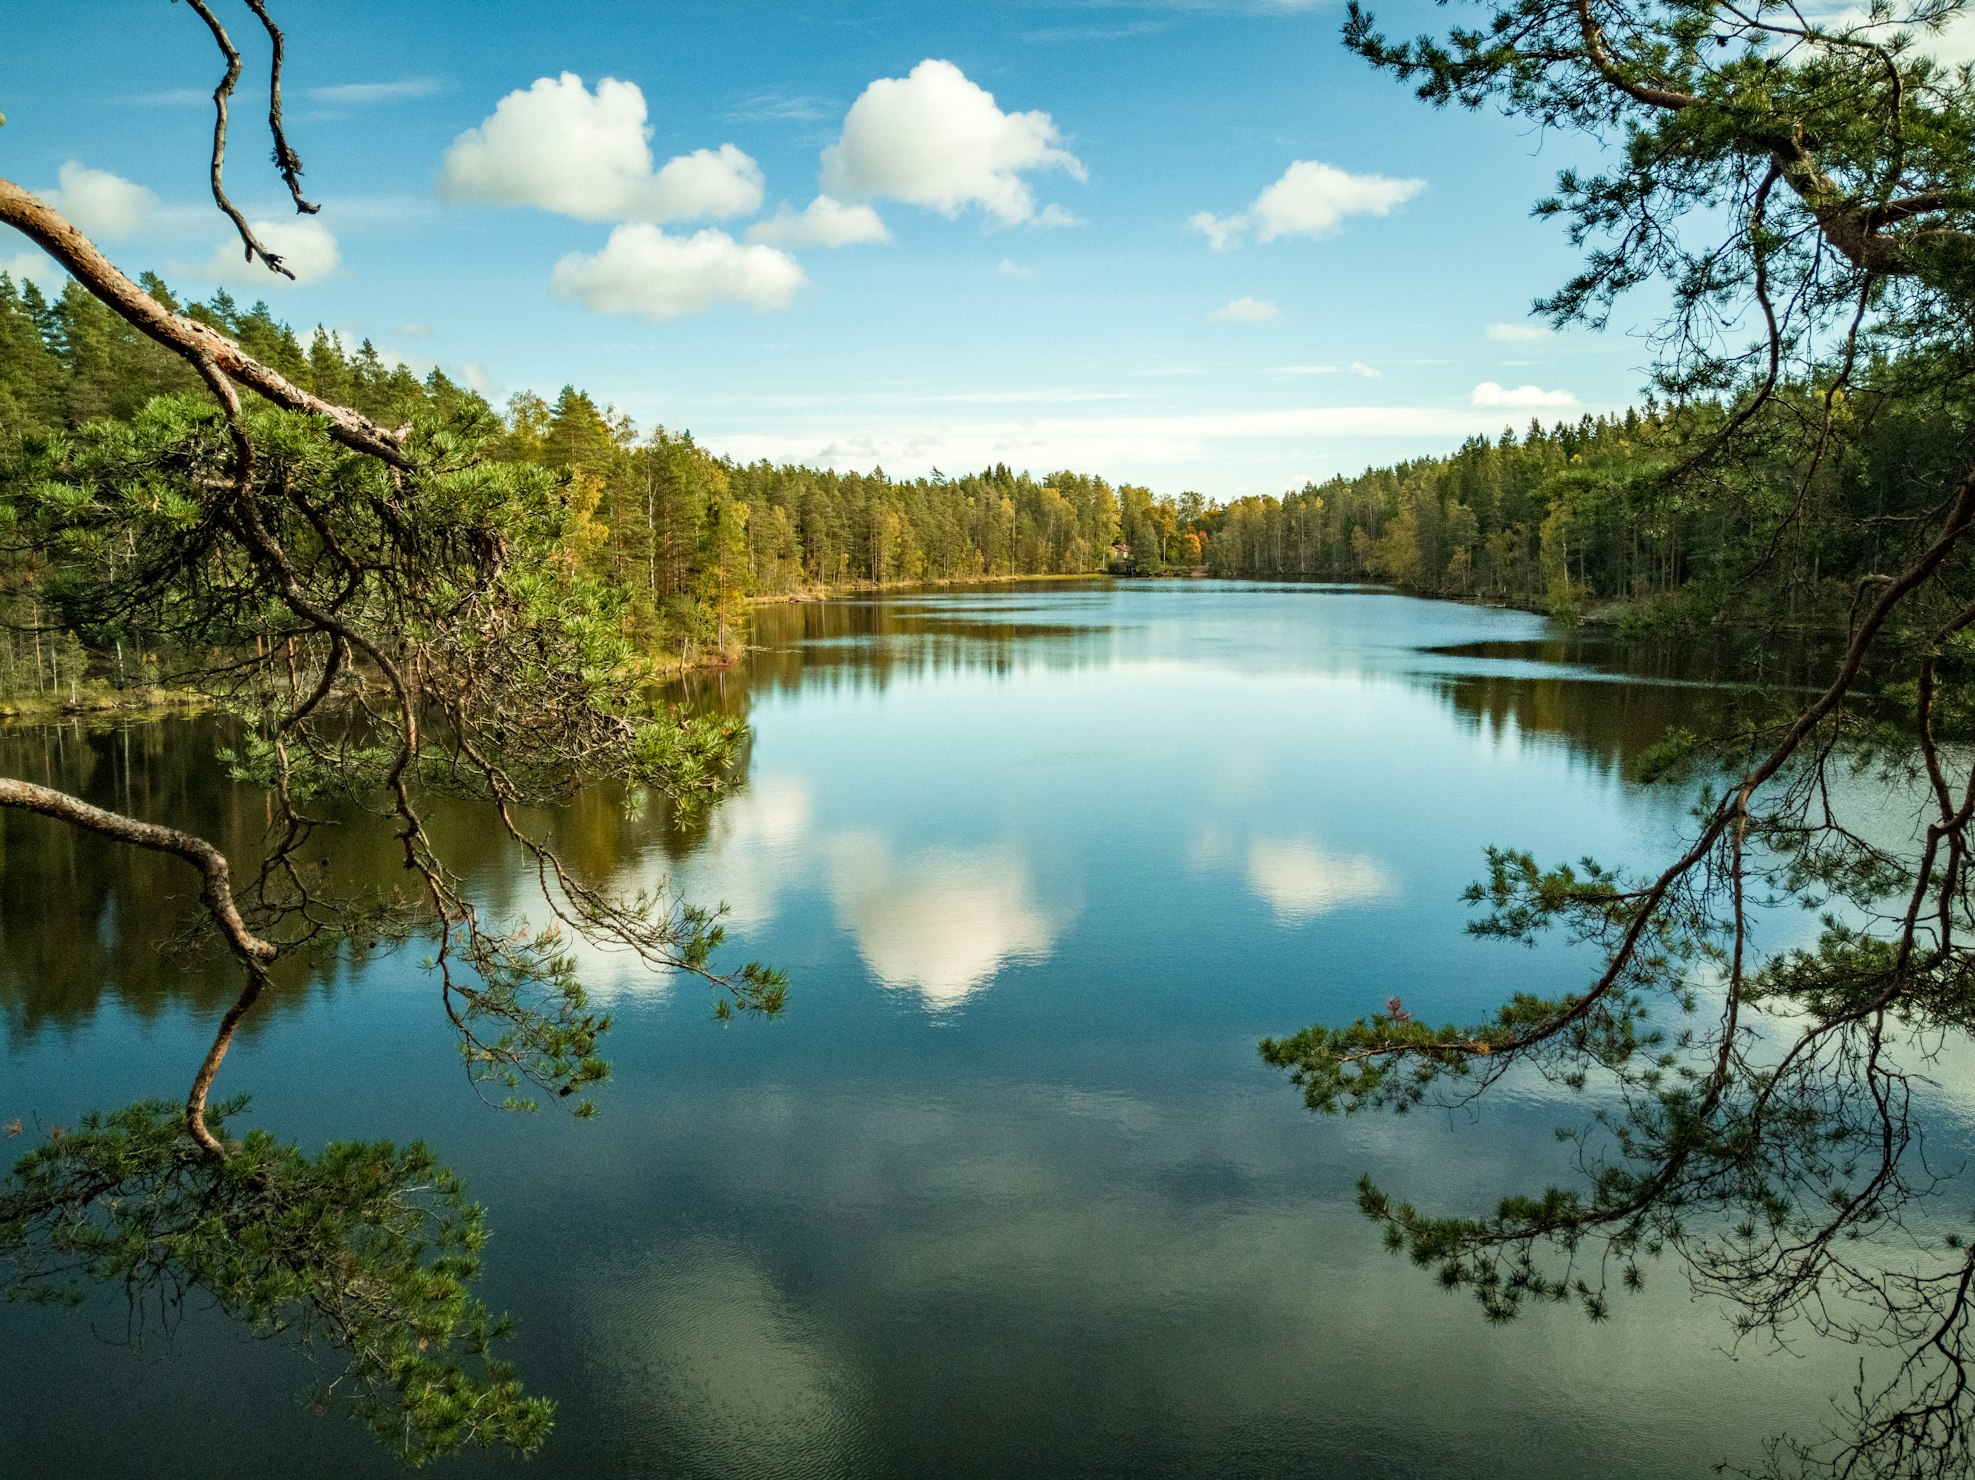 Lake at Nuuksio, Finland